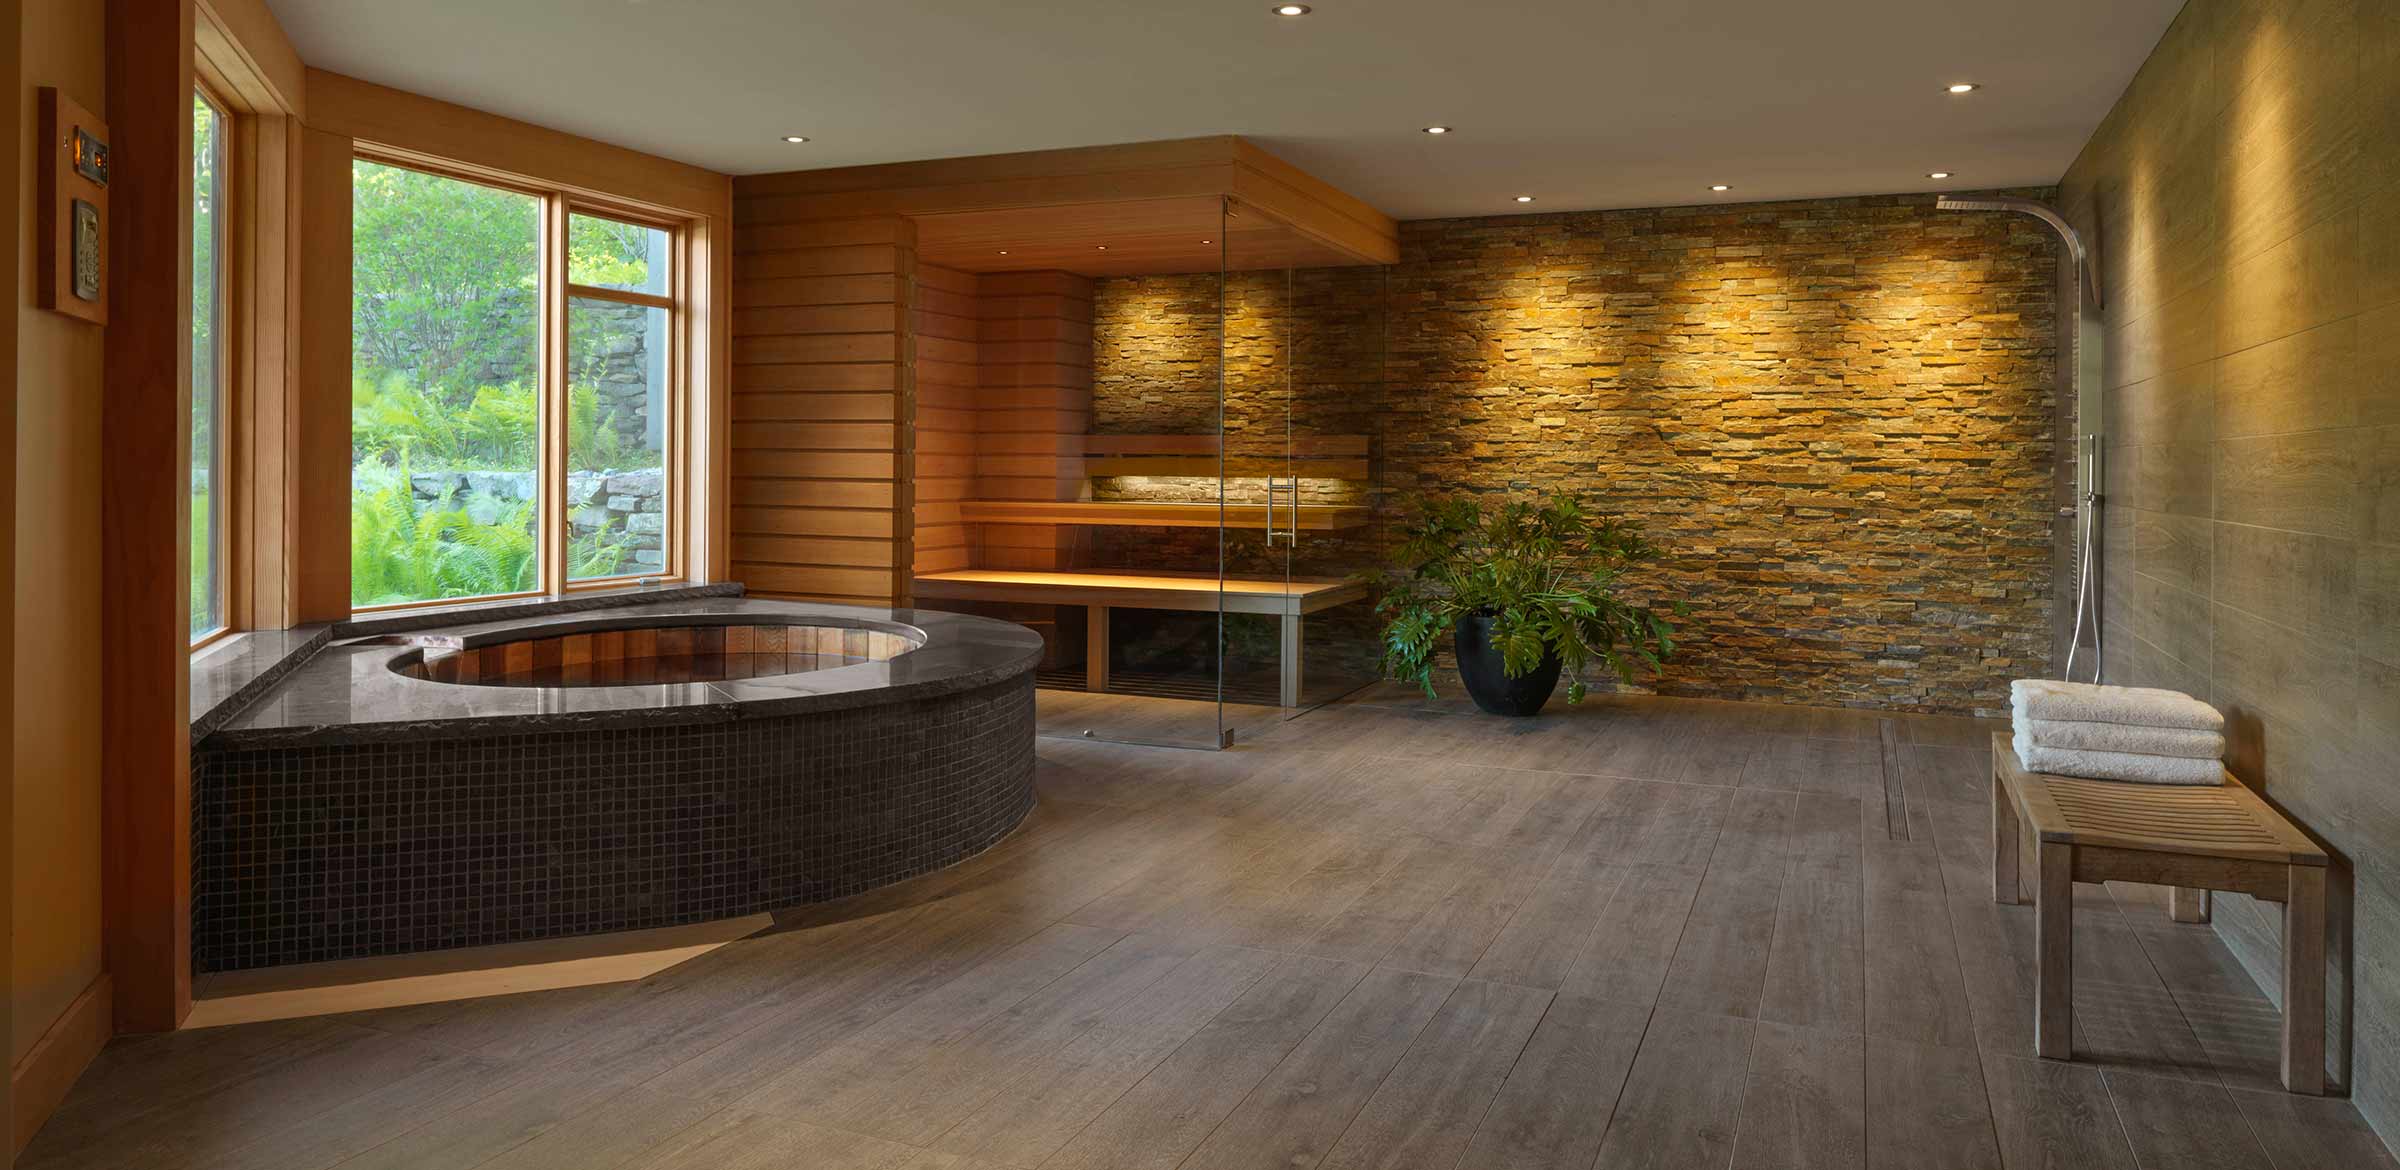 large spa with bathroom and sauna